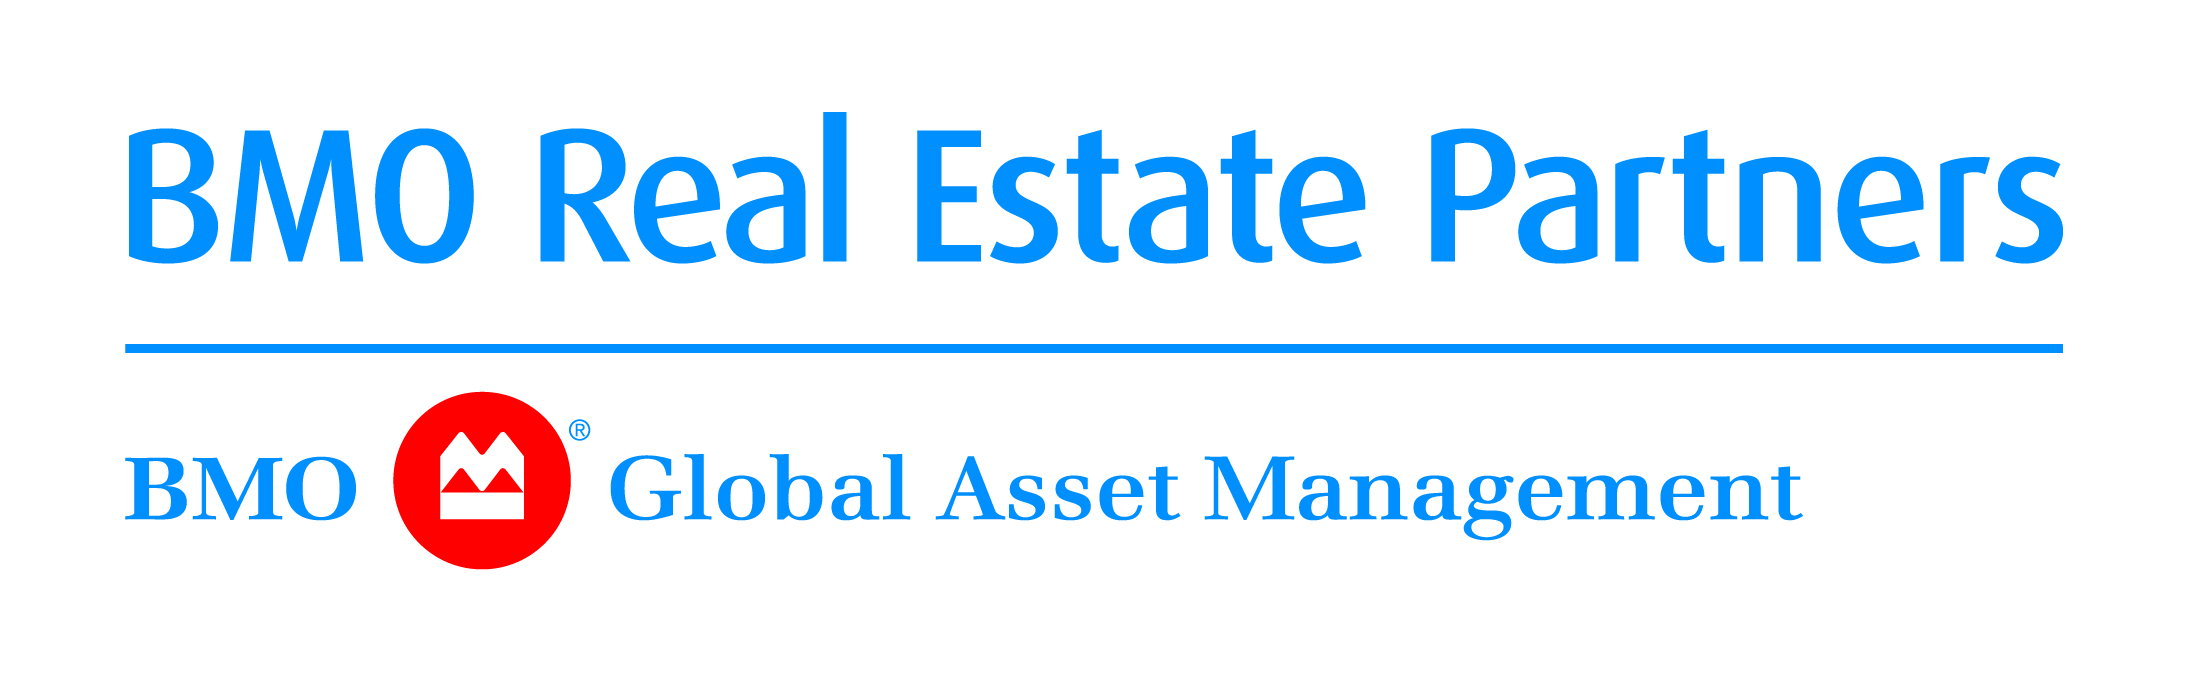 BMO Real Estate Partners